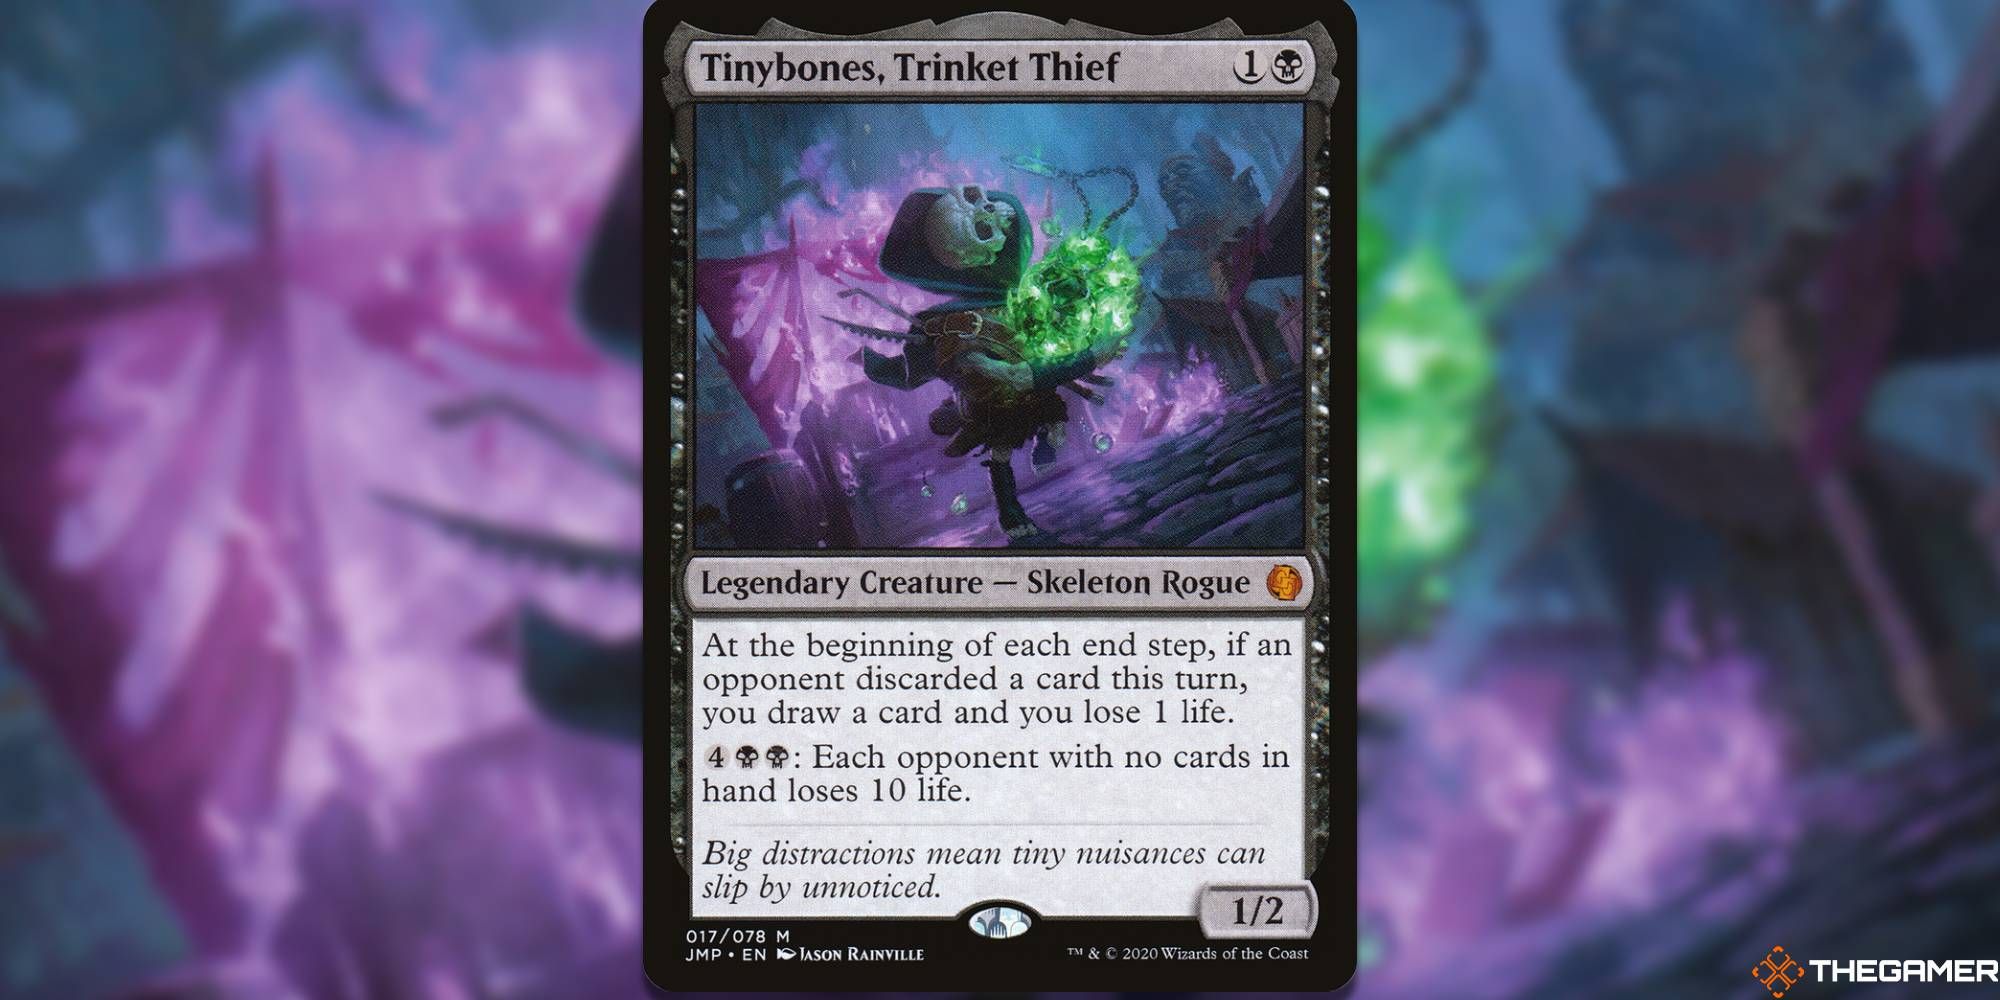 Tinybones, Trinket Thief